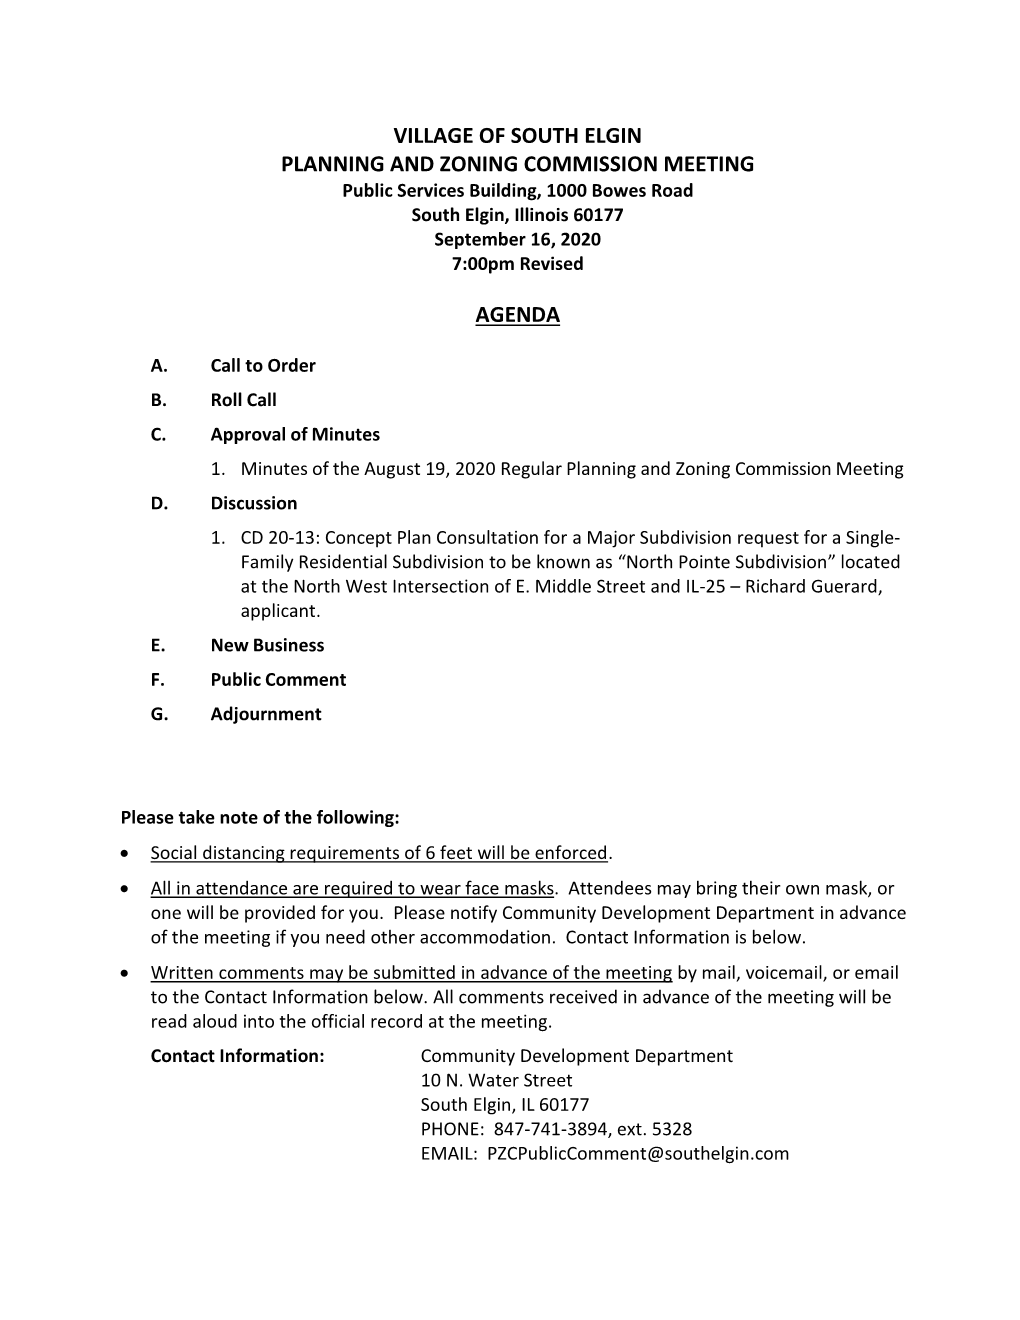 PZC September 16 2020 Agenda Packet.Pdf